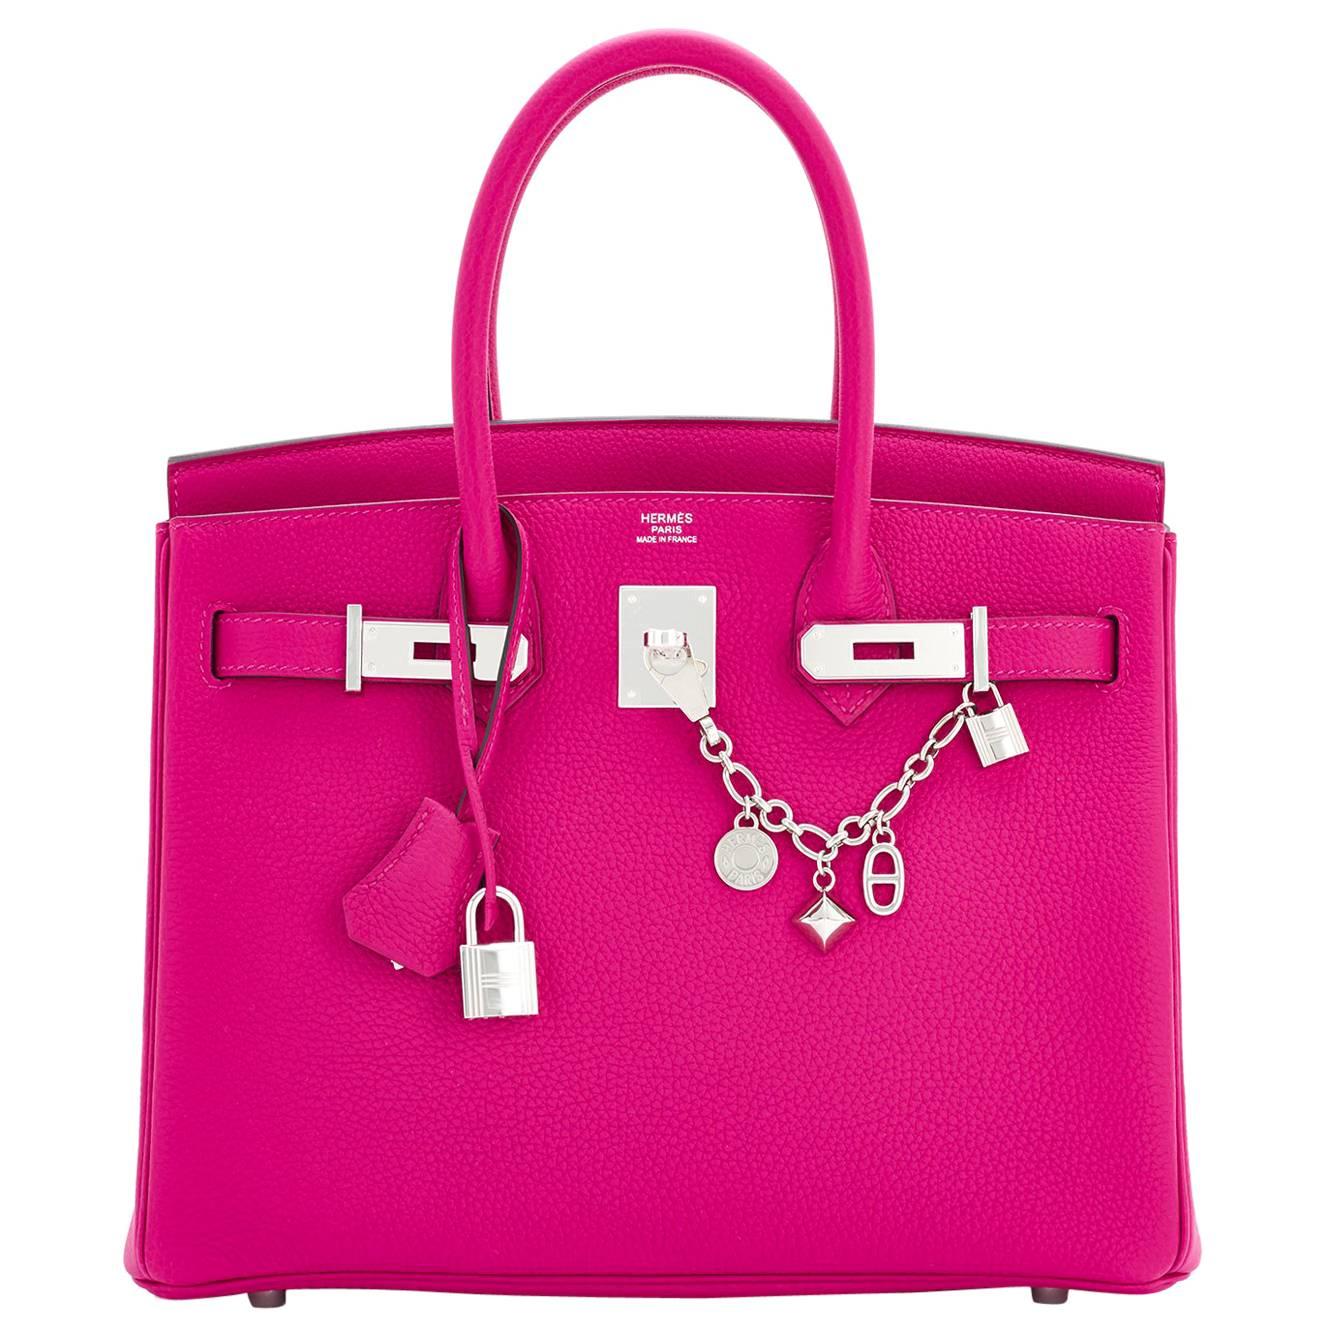 Hermes Rose Pourpre 30cm Pink Togo Palladium Hardware Birkin Bag